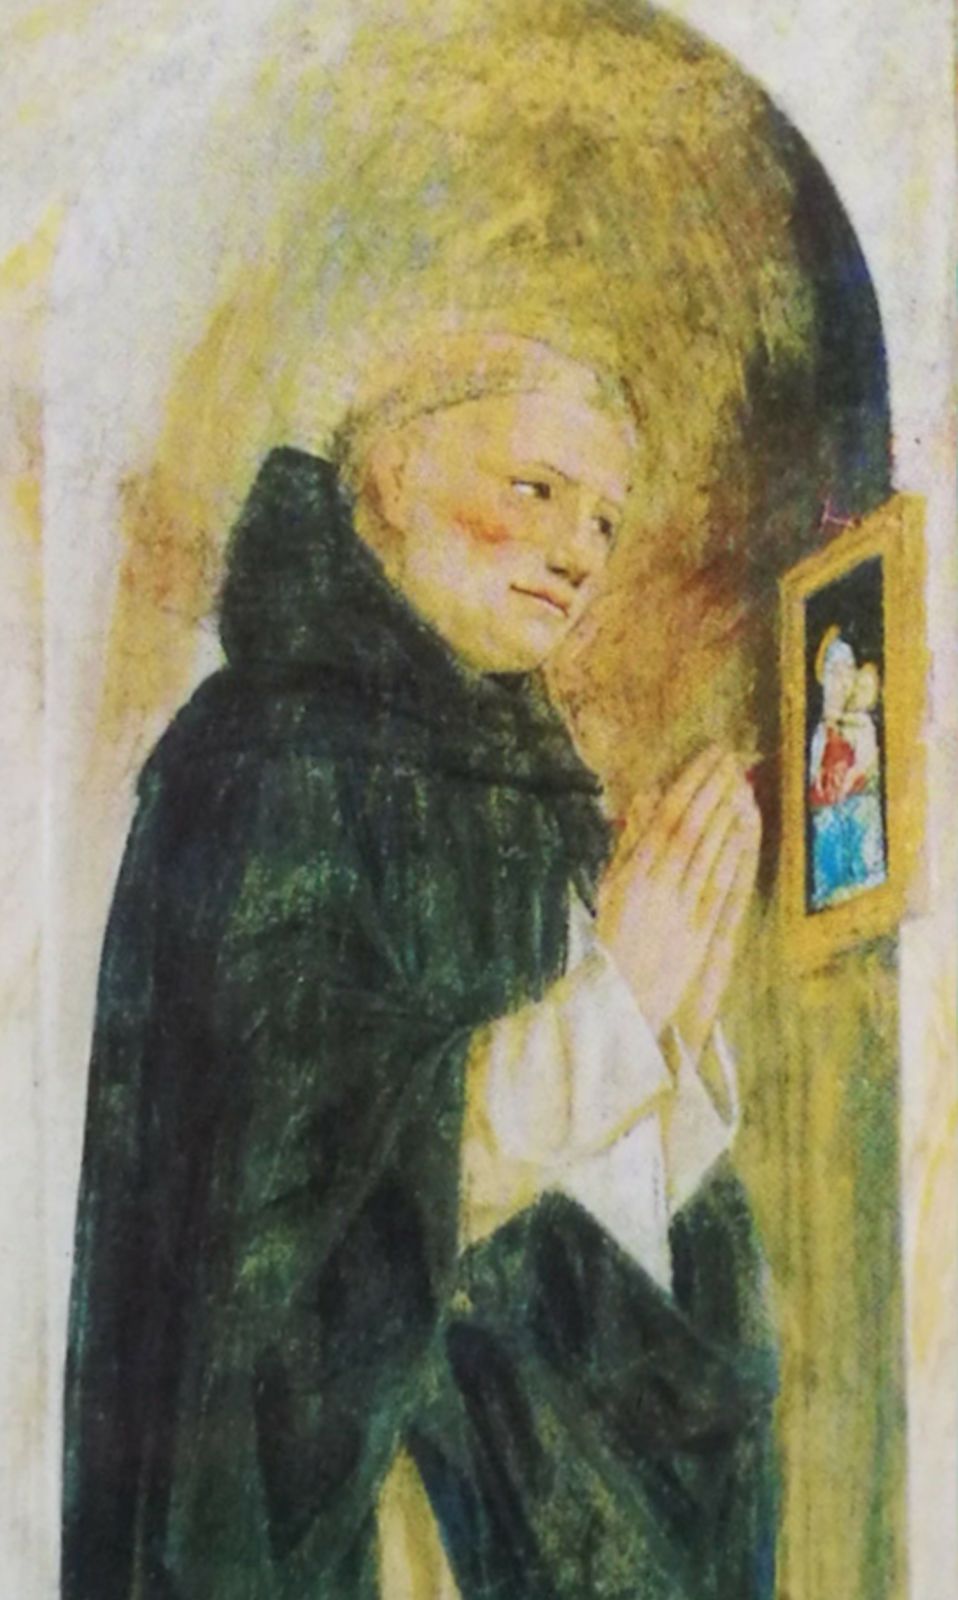 B. Butitone: Fresko, um 1500, in der Kirche Santa Maria delle Grazie in Mailand